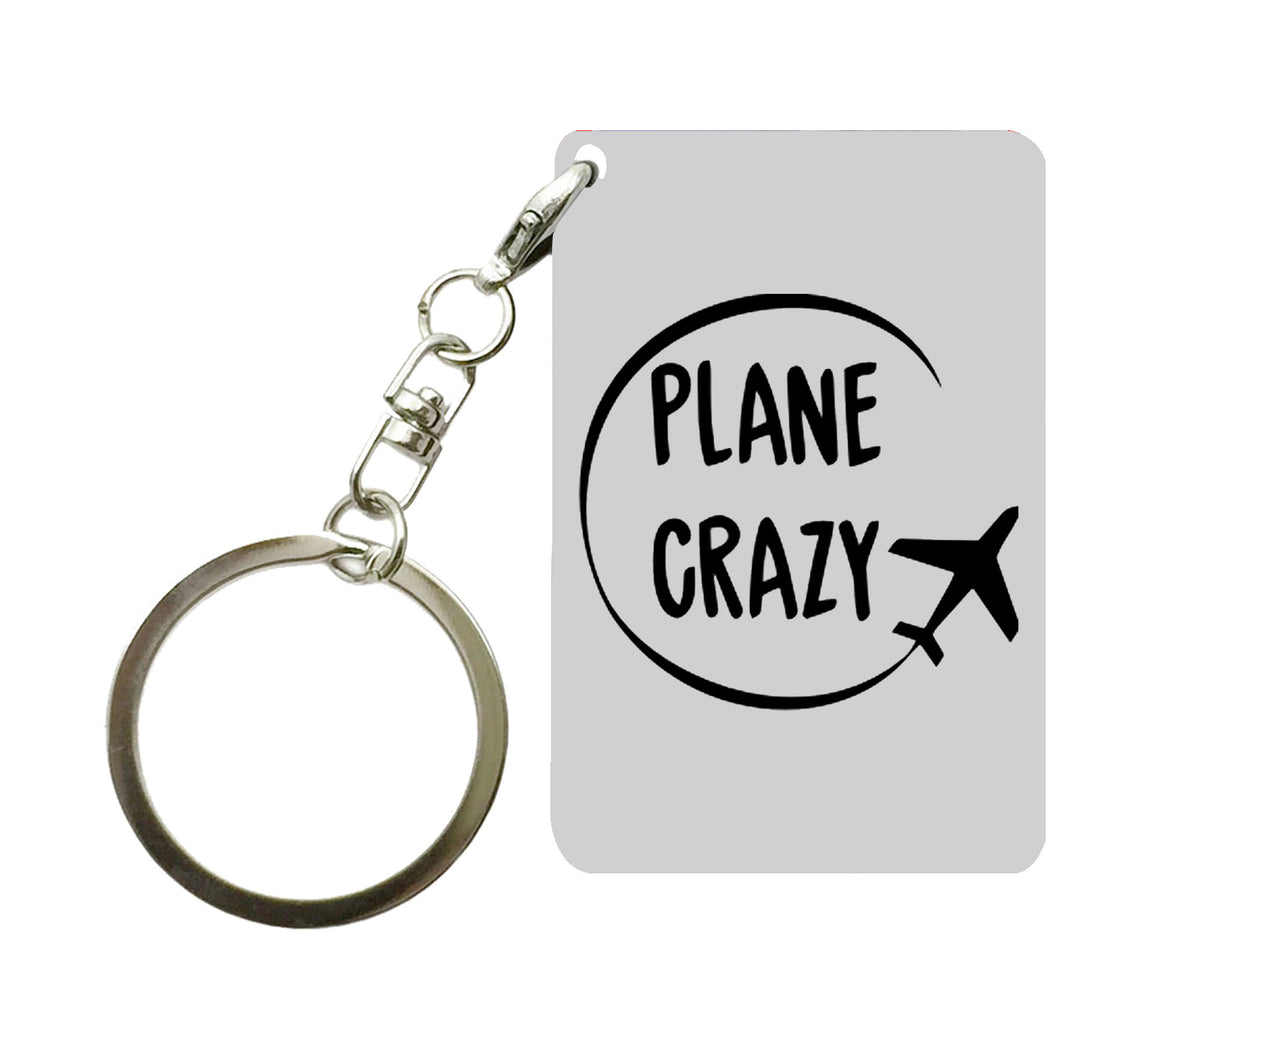 Plane Crazy Designed Key Chains